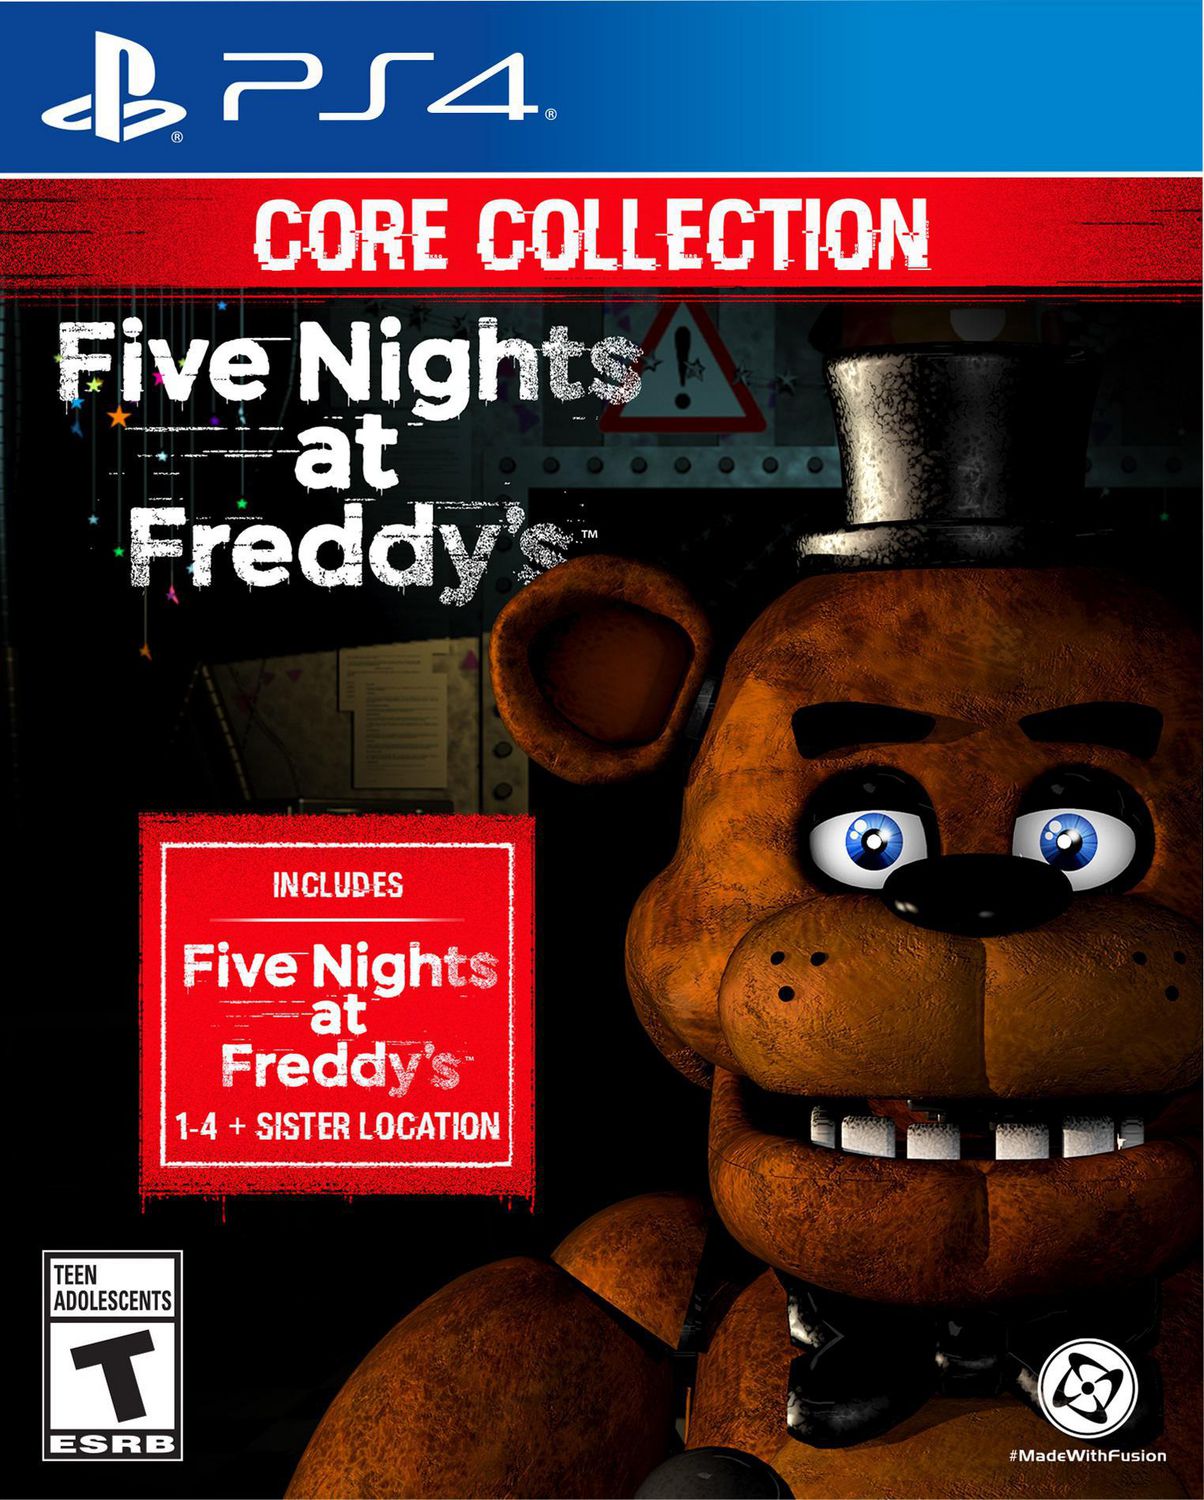 Workshop Steam::[FNaF] Five Nights at Freddy's 3 Map